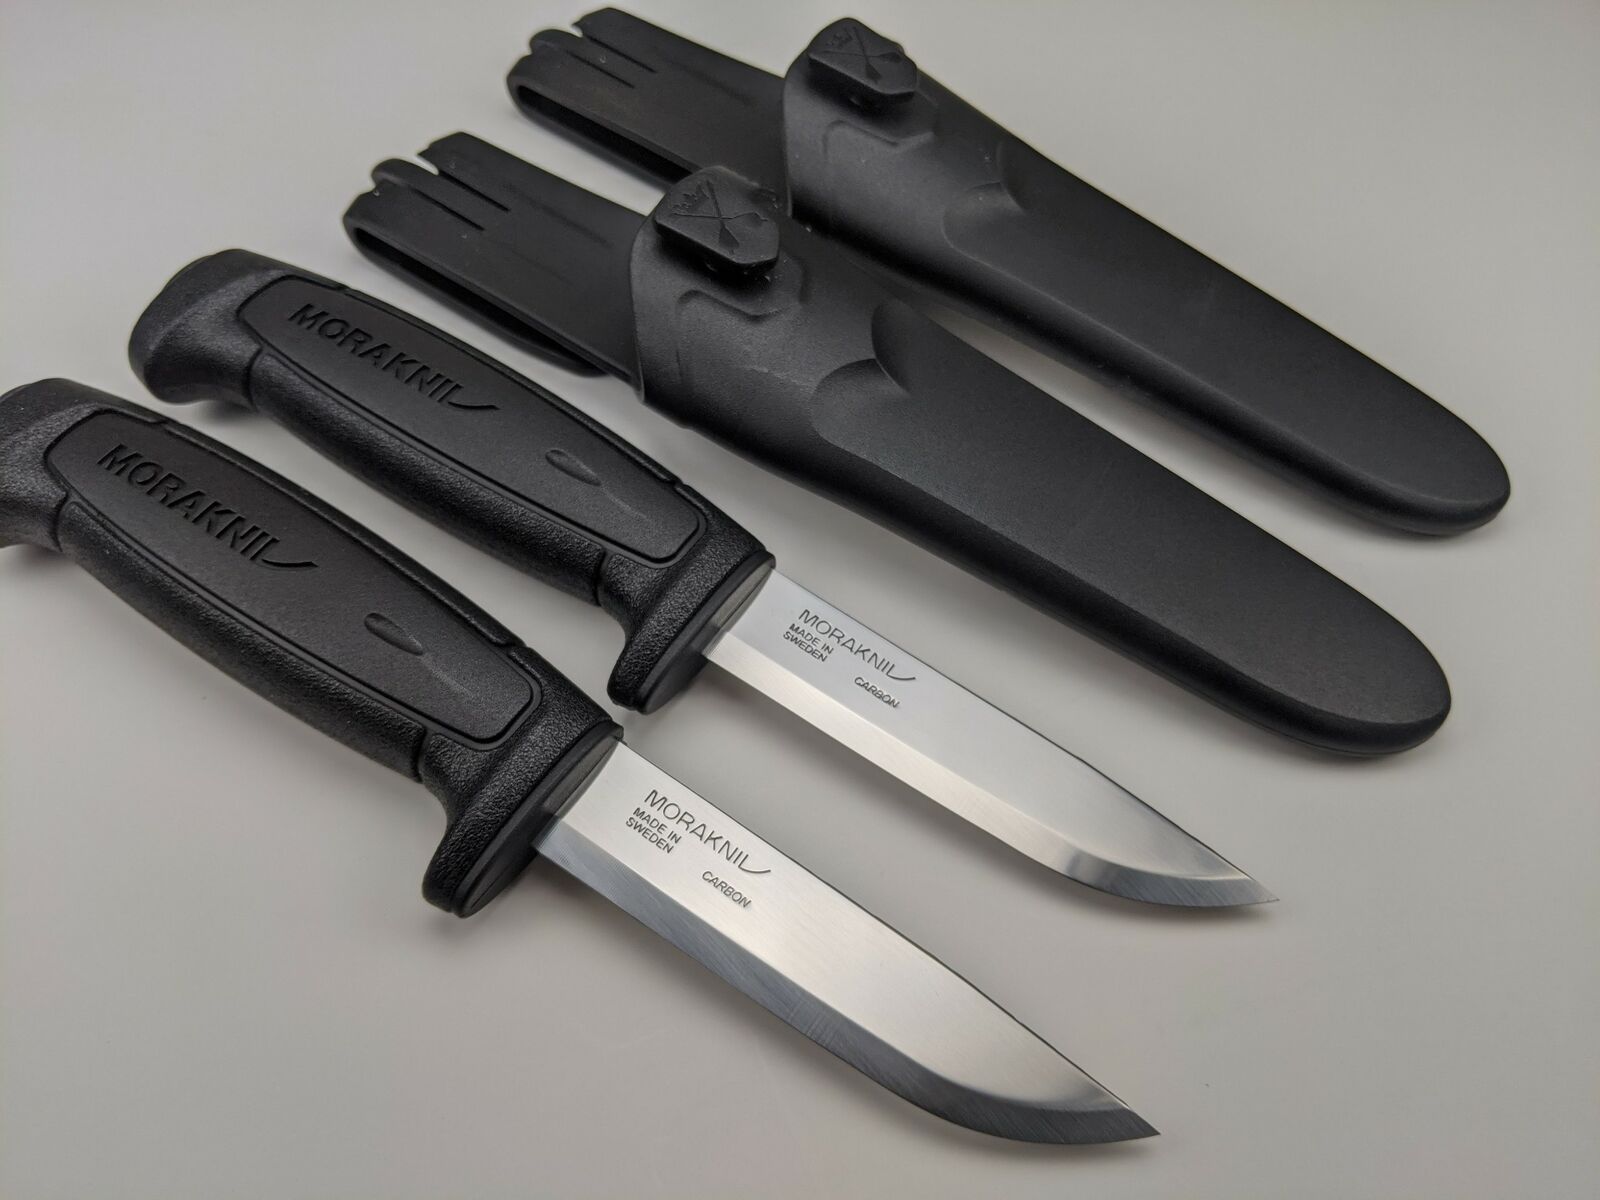 2 Pack Lot - Morakniv Basic 511 Knife & Sheath - 2 Black Mora Knives & Sheaths Morakniv